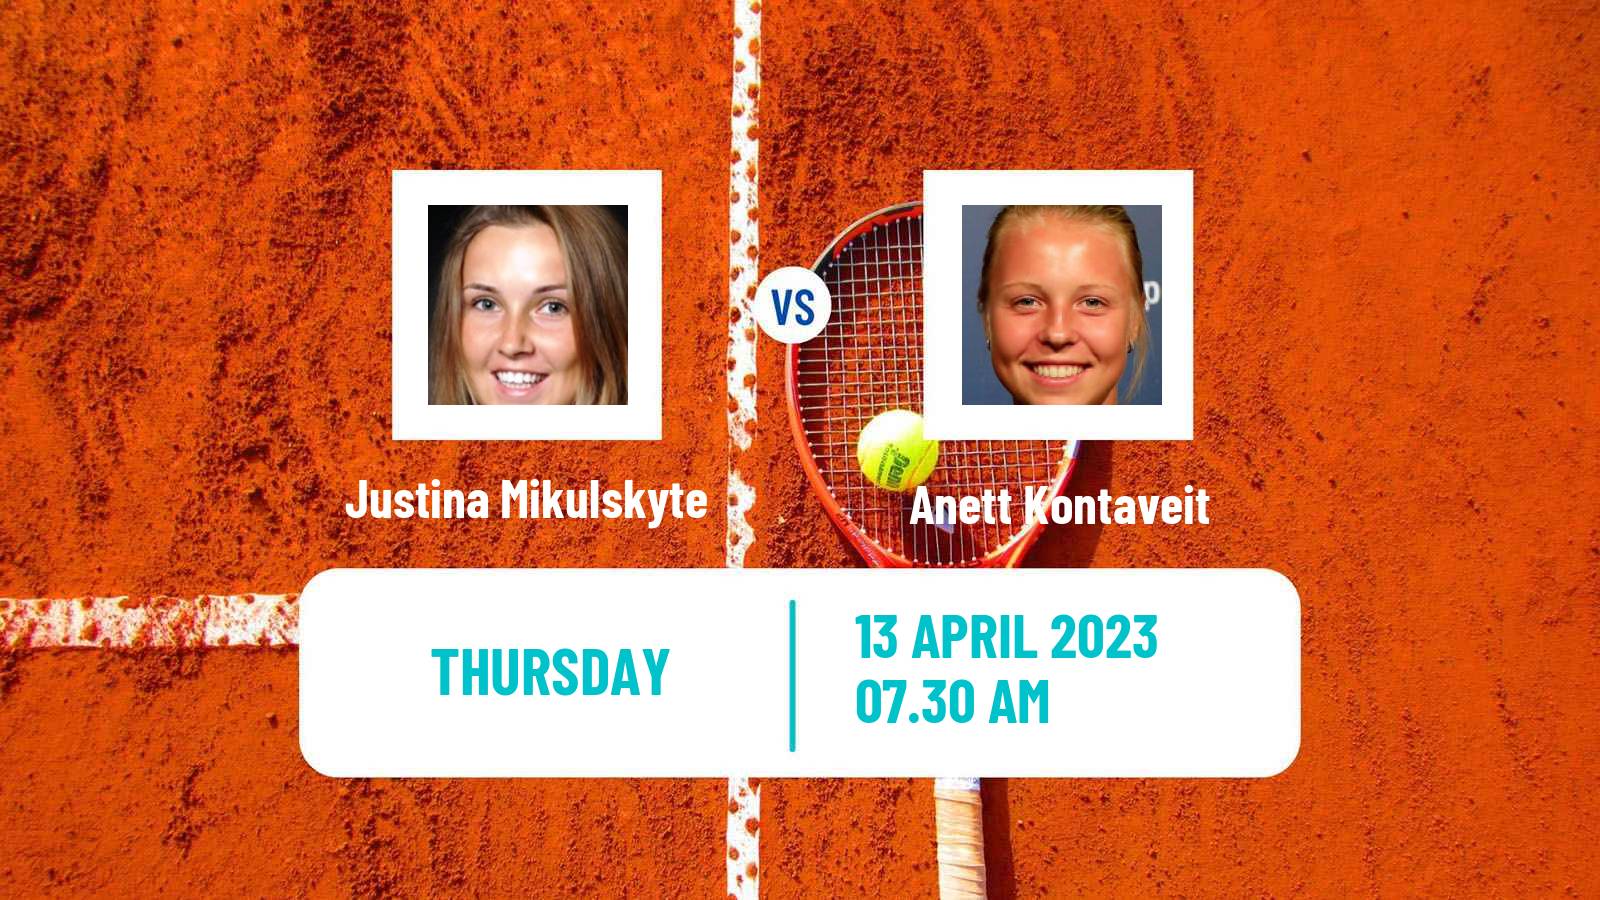 Tennis WTA Billie Jean King Cup Group II Justina Mikulskyte - Anett Kontaveit